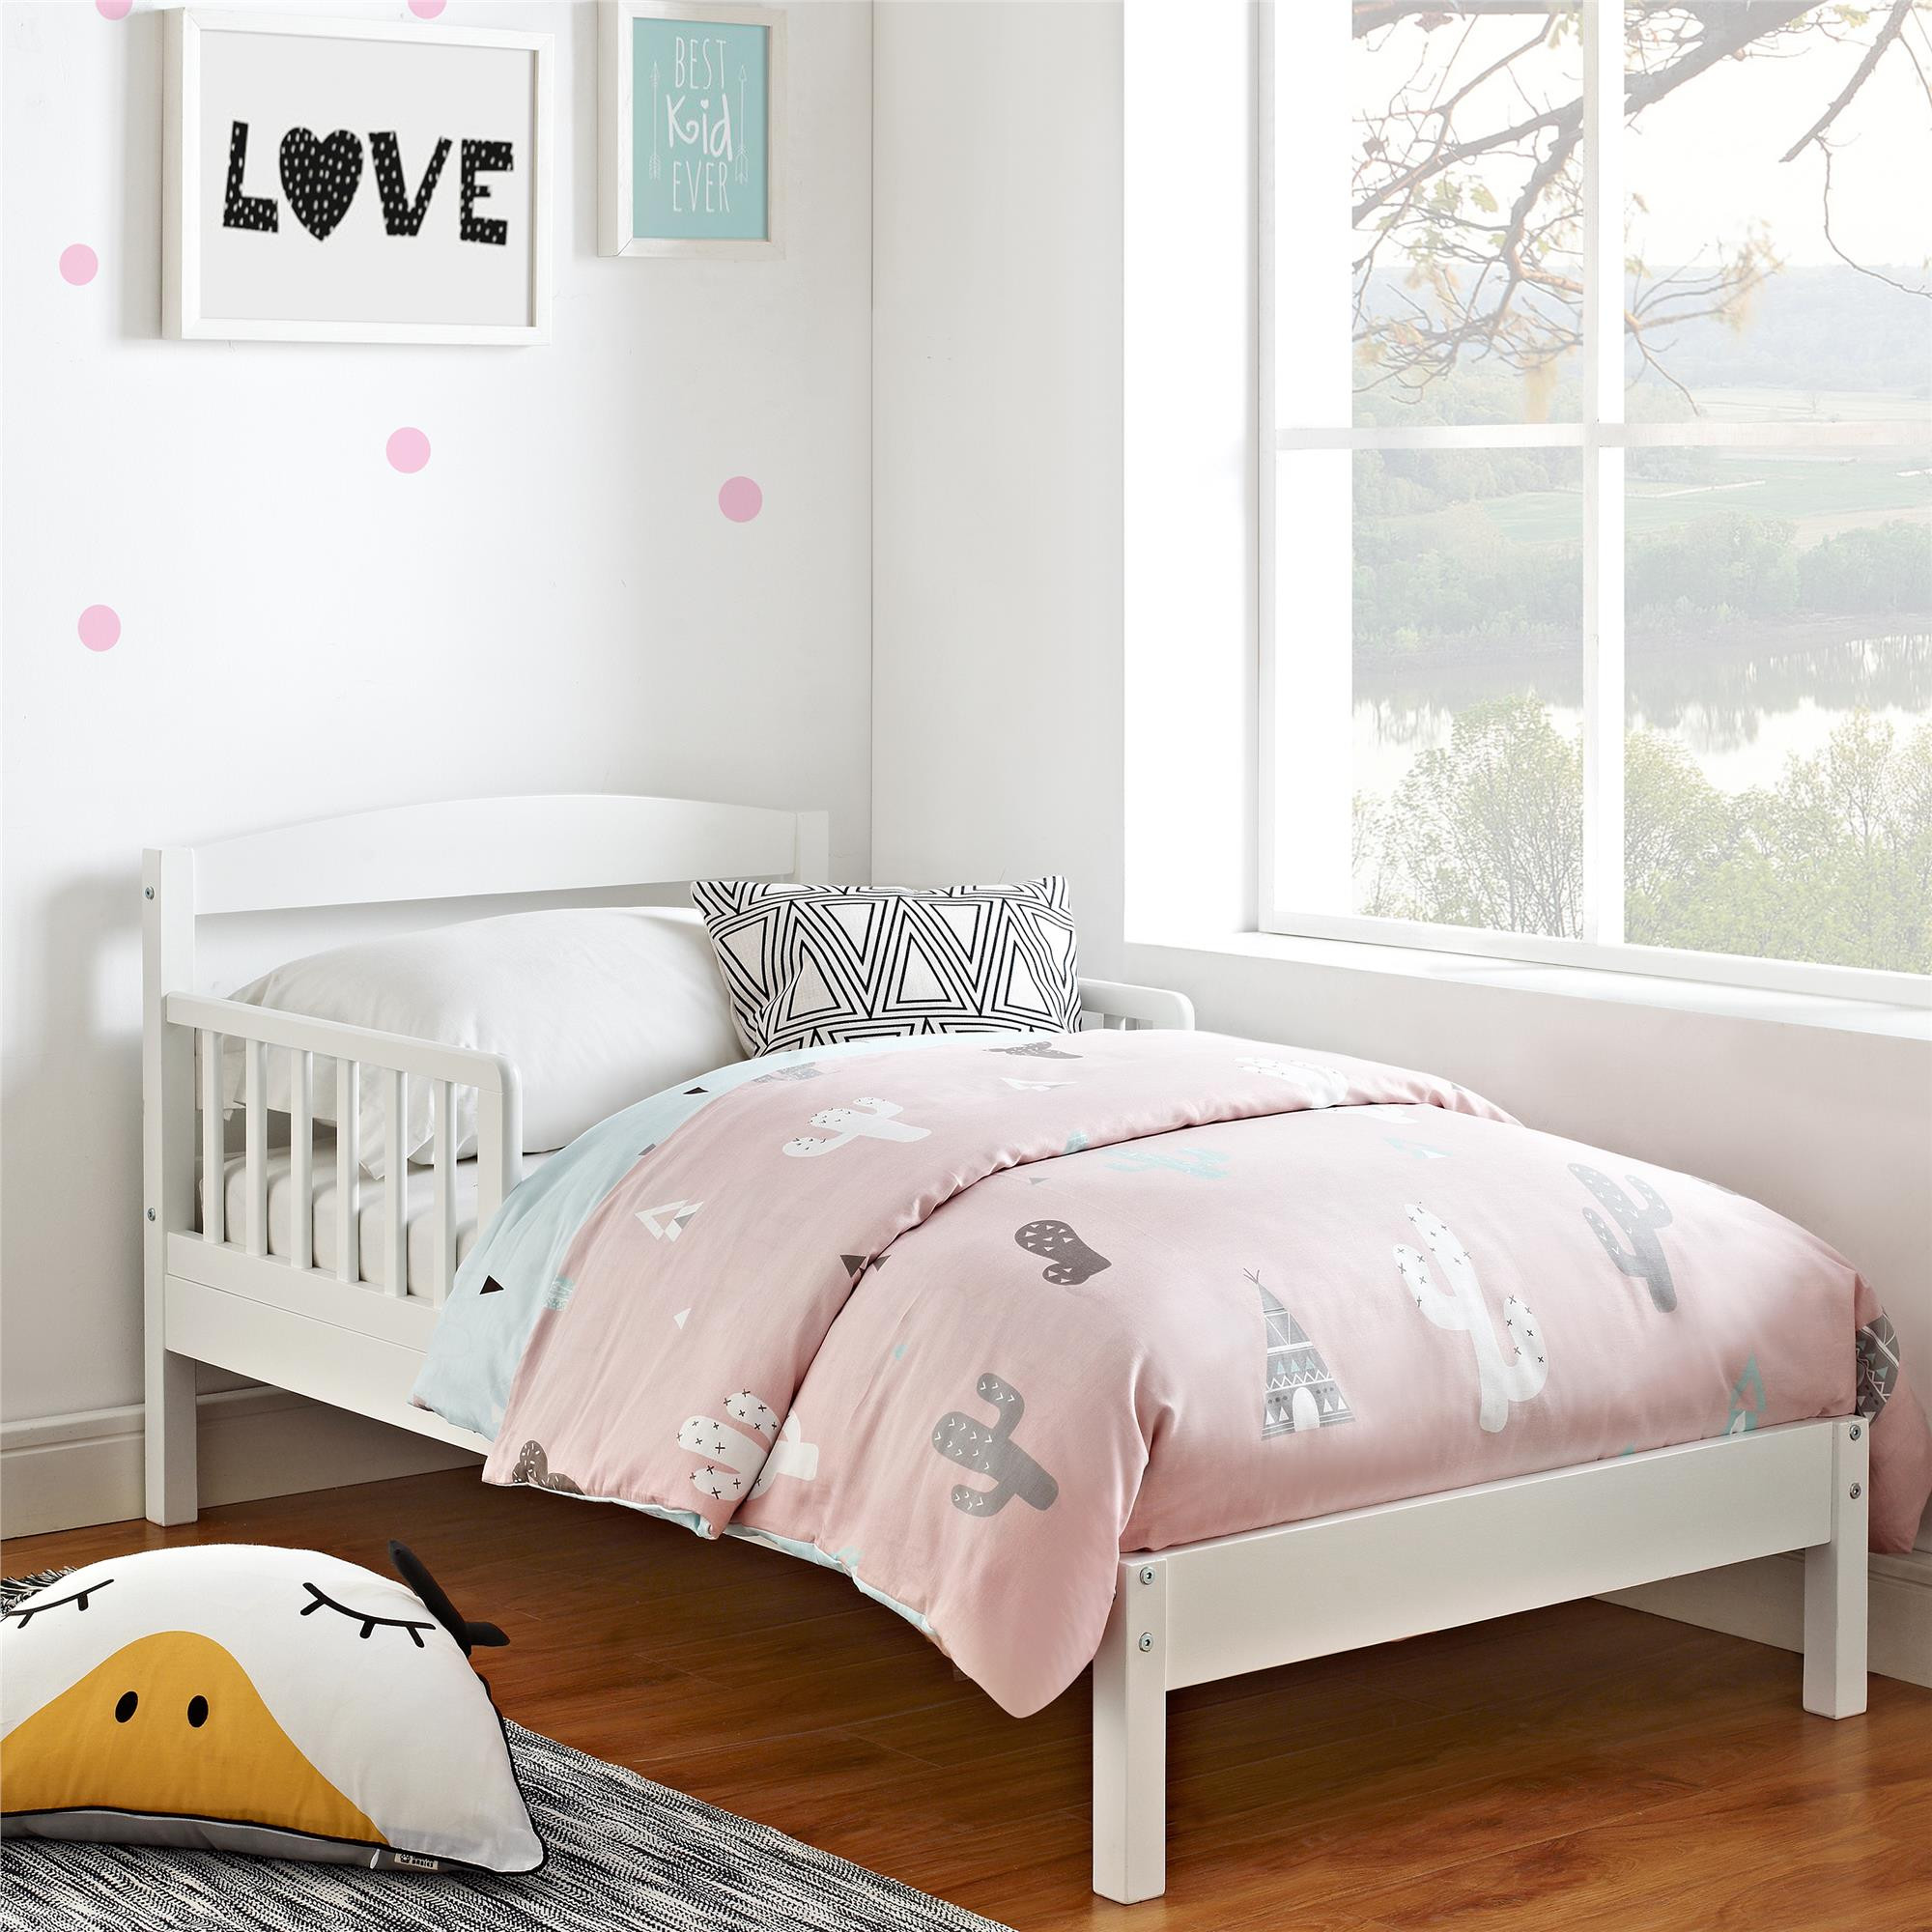 Walmart Kids Bedroom Sets
 Baby Relax Jackson Toddler Bed Kids Bedroom Furniture